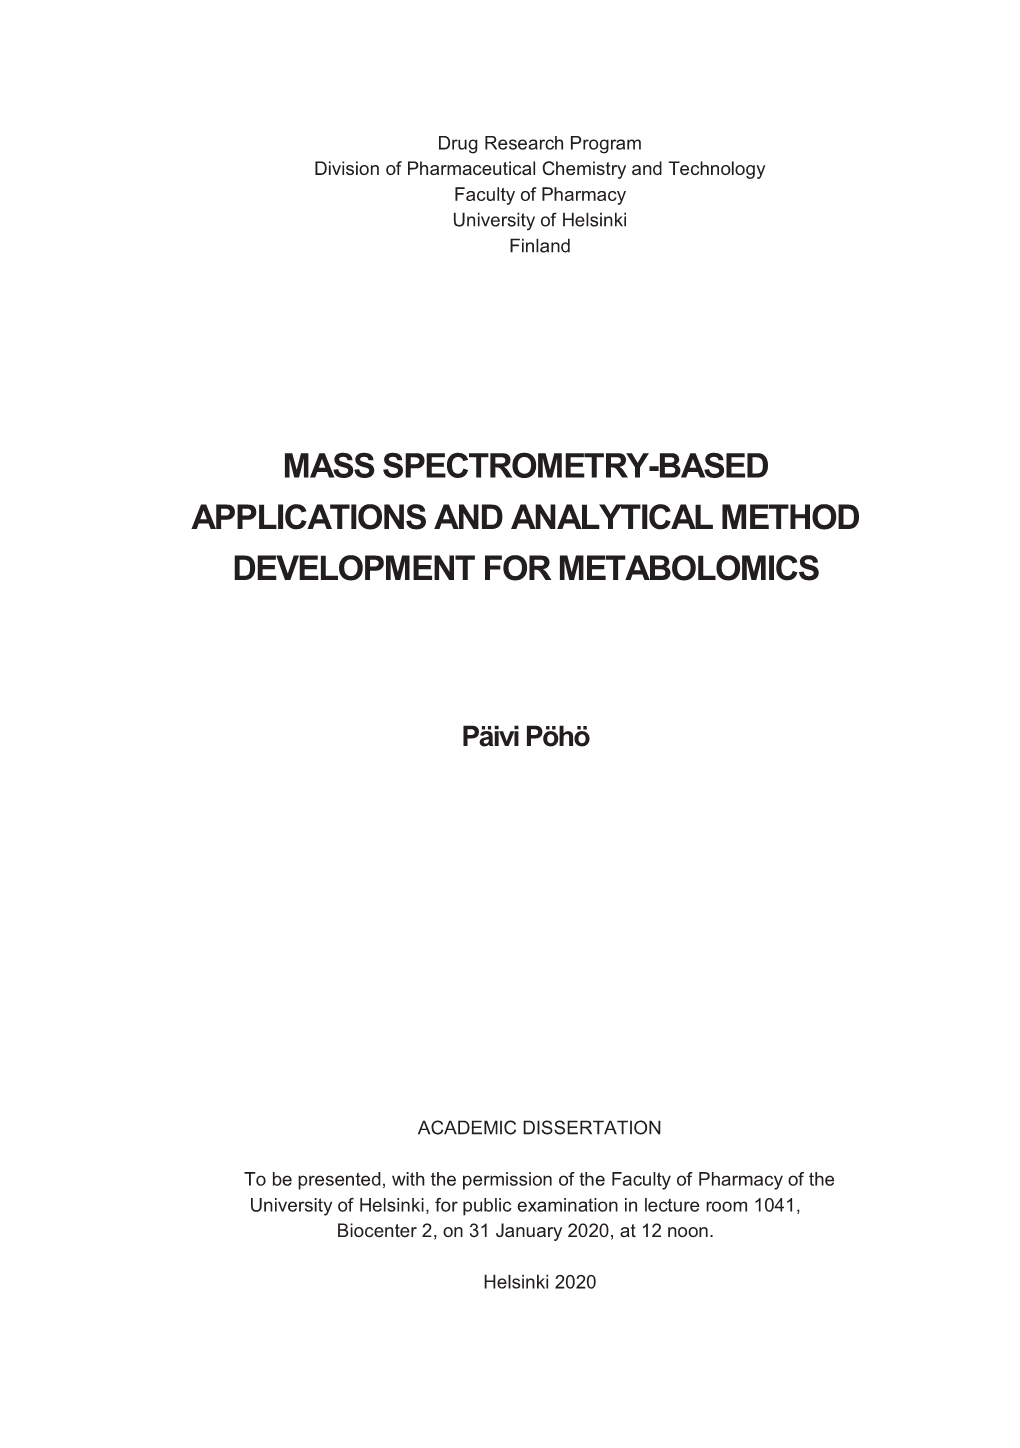 Mass Spectrometry-Based Applications and Analytical Method Development for Metabolomics